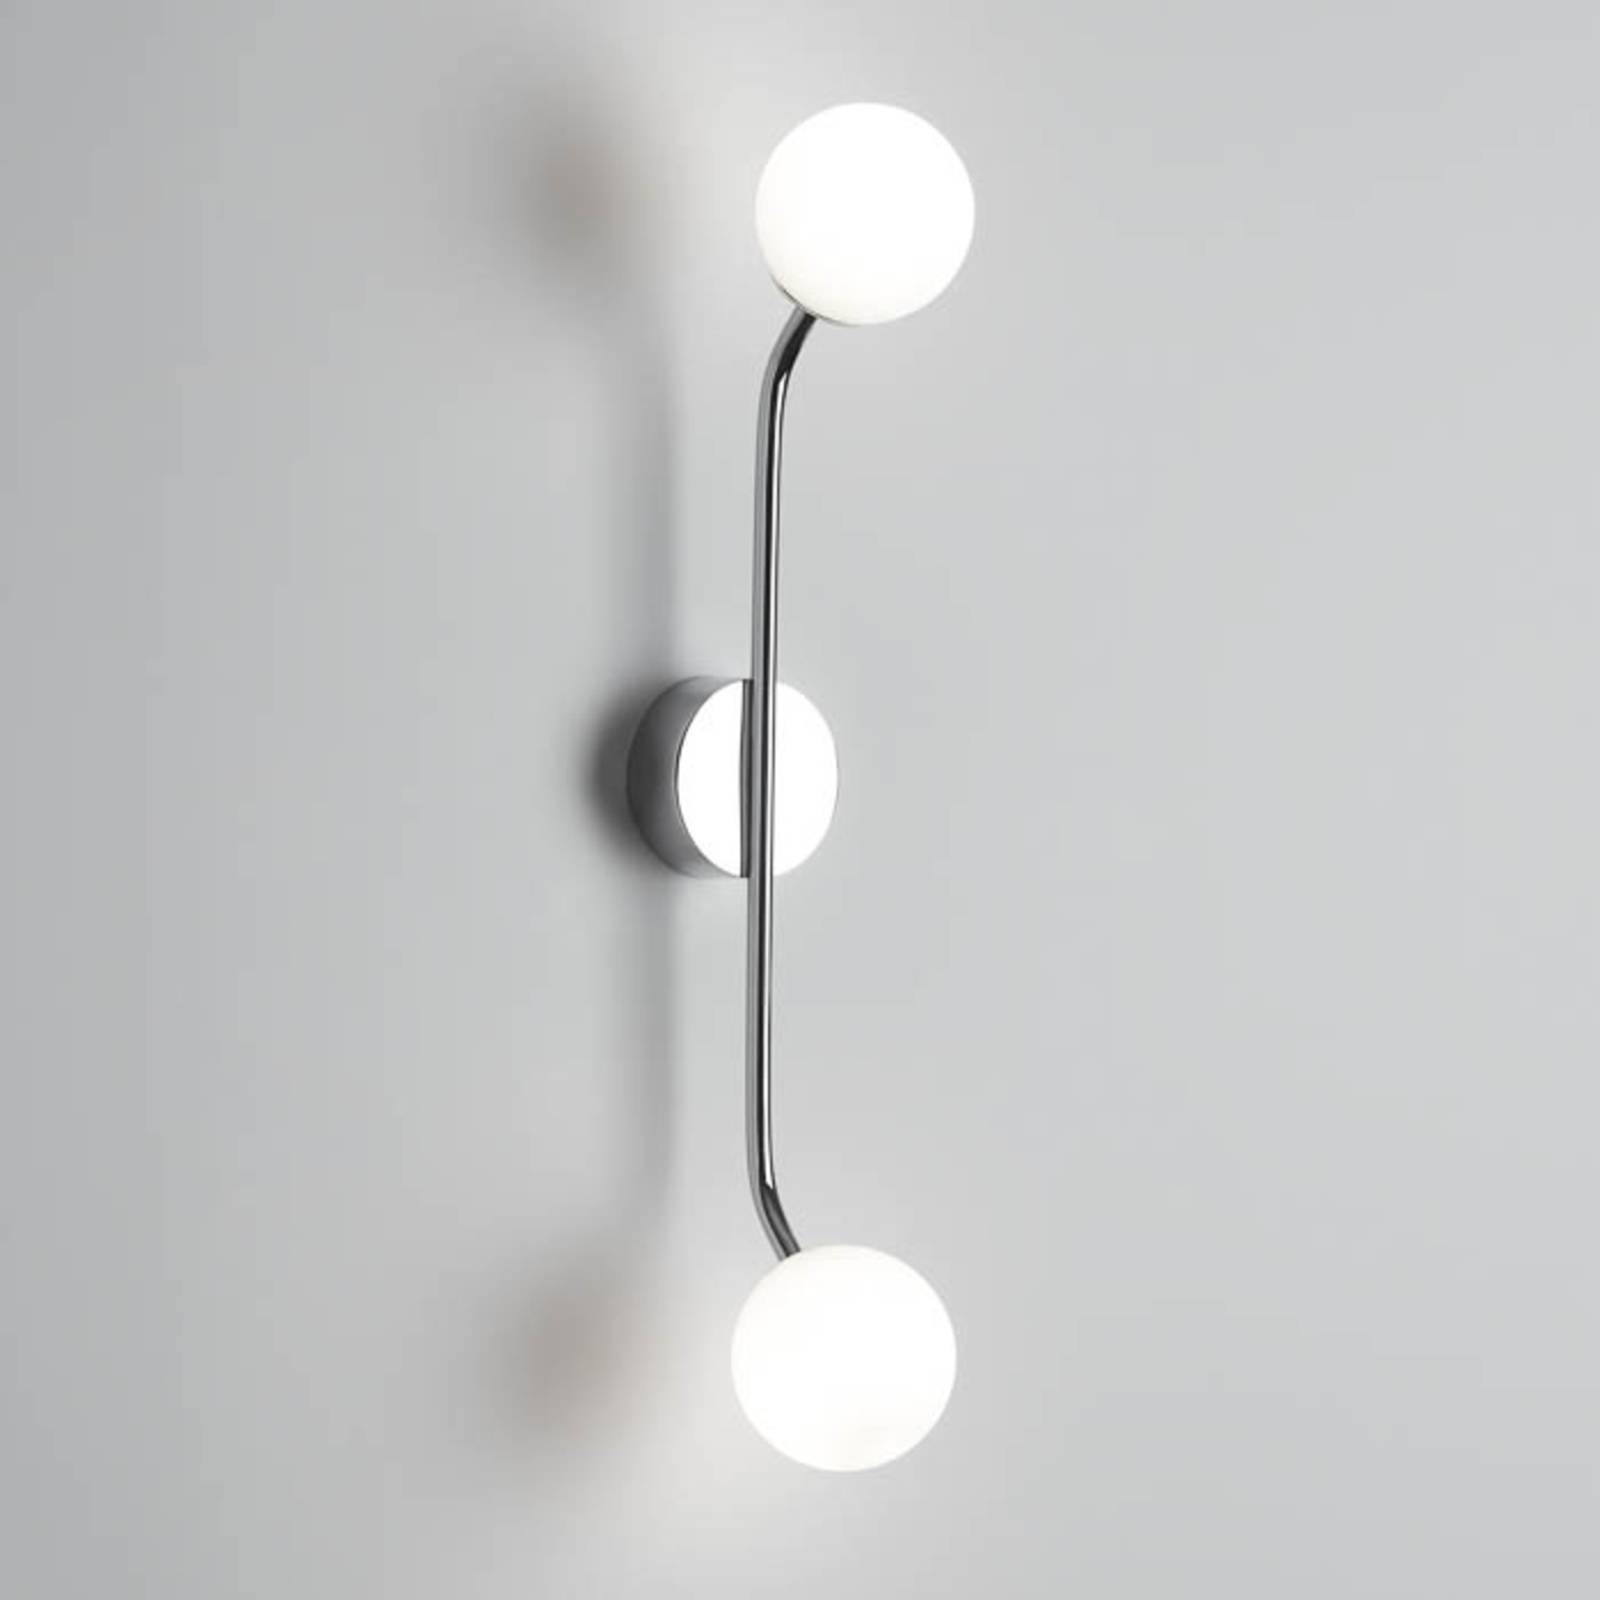 Image of Decor Walther Pep applique, 2 lampes, chromée 4250412882930